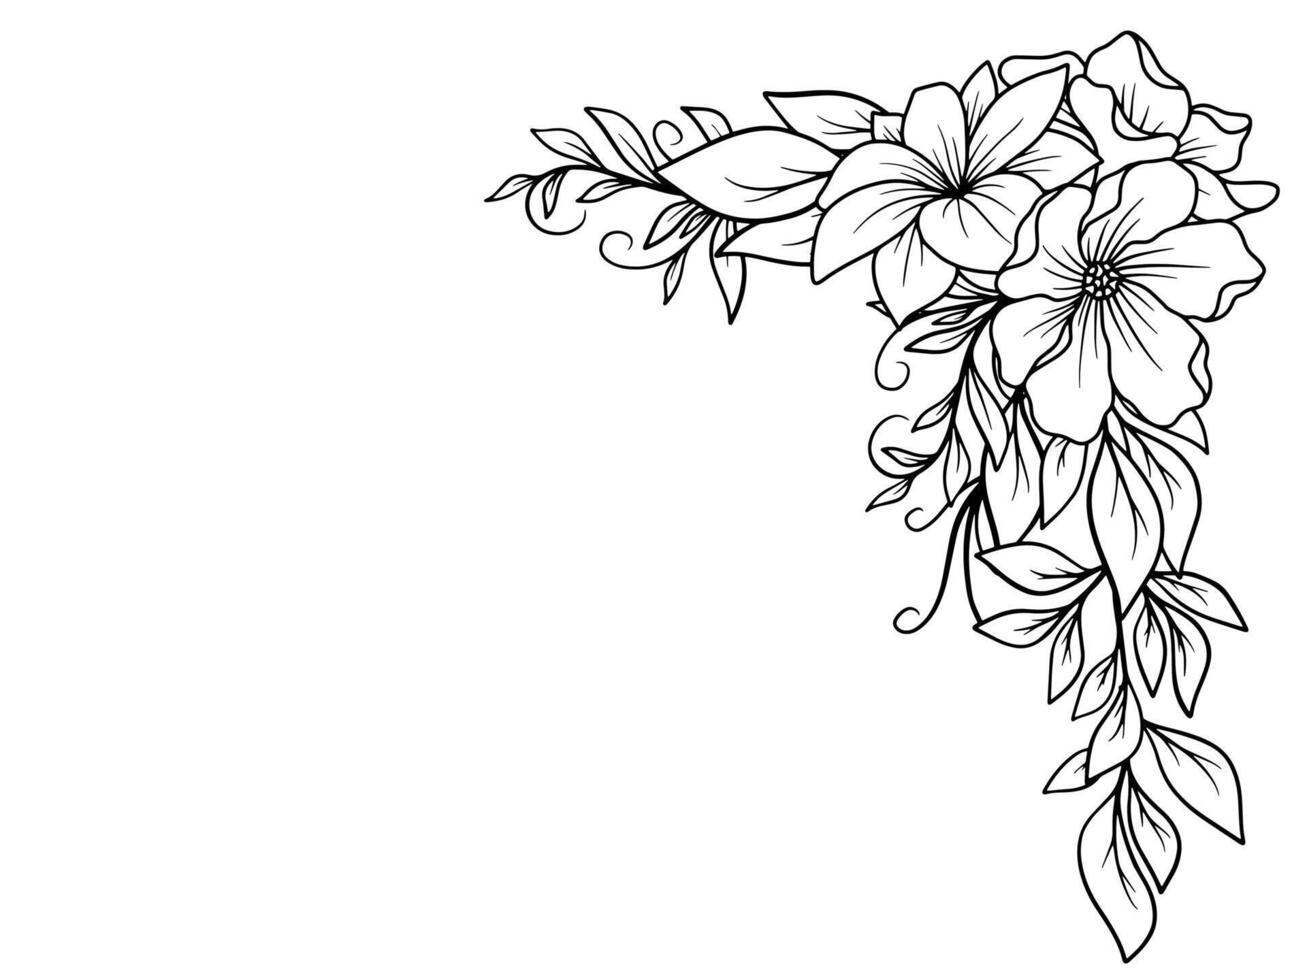 Bouquet Flower Corner Outline Illustration vector